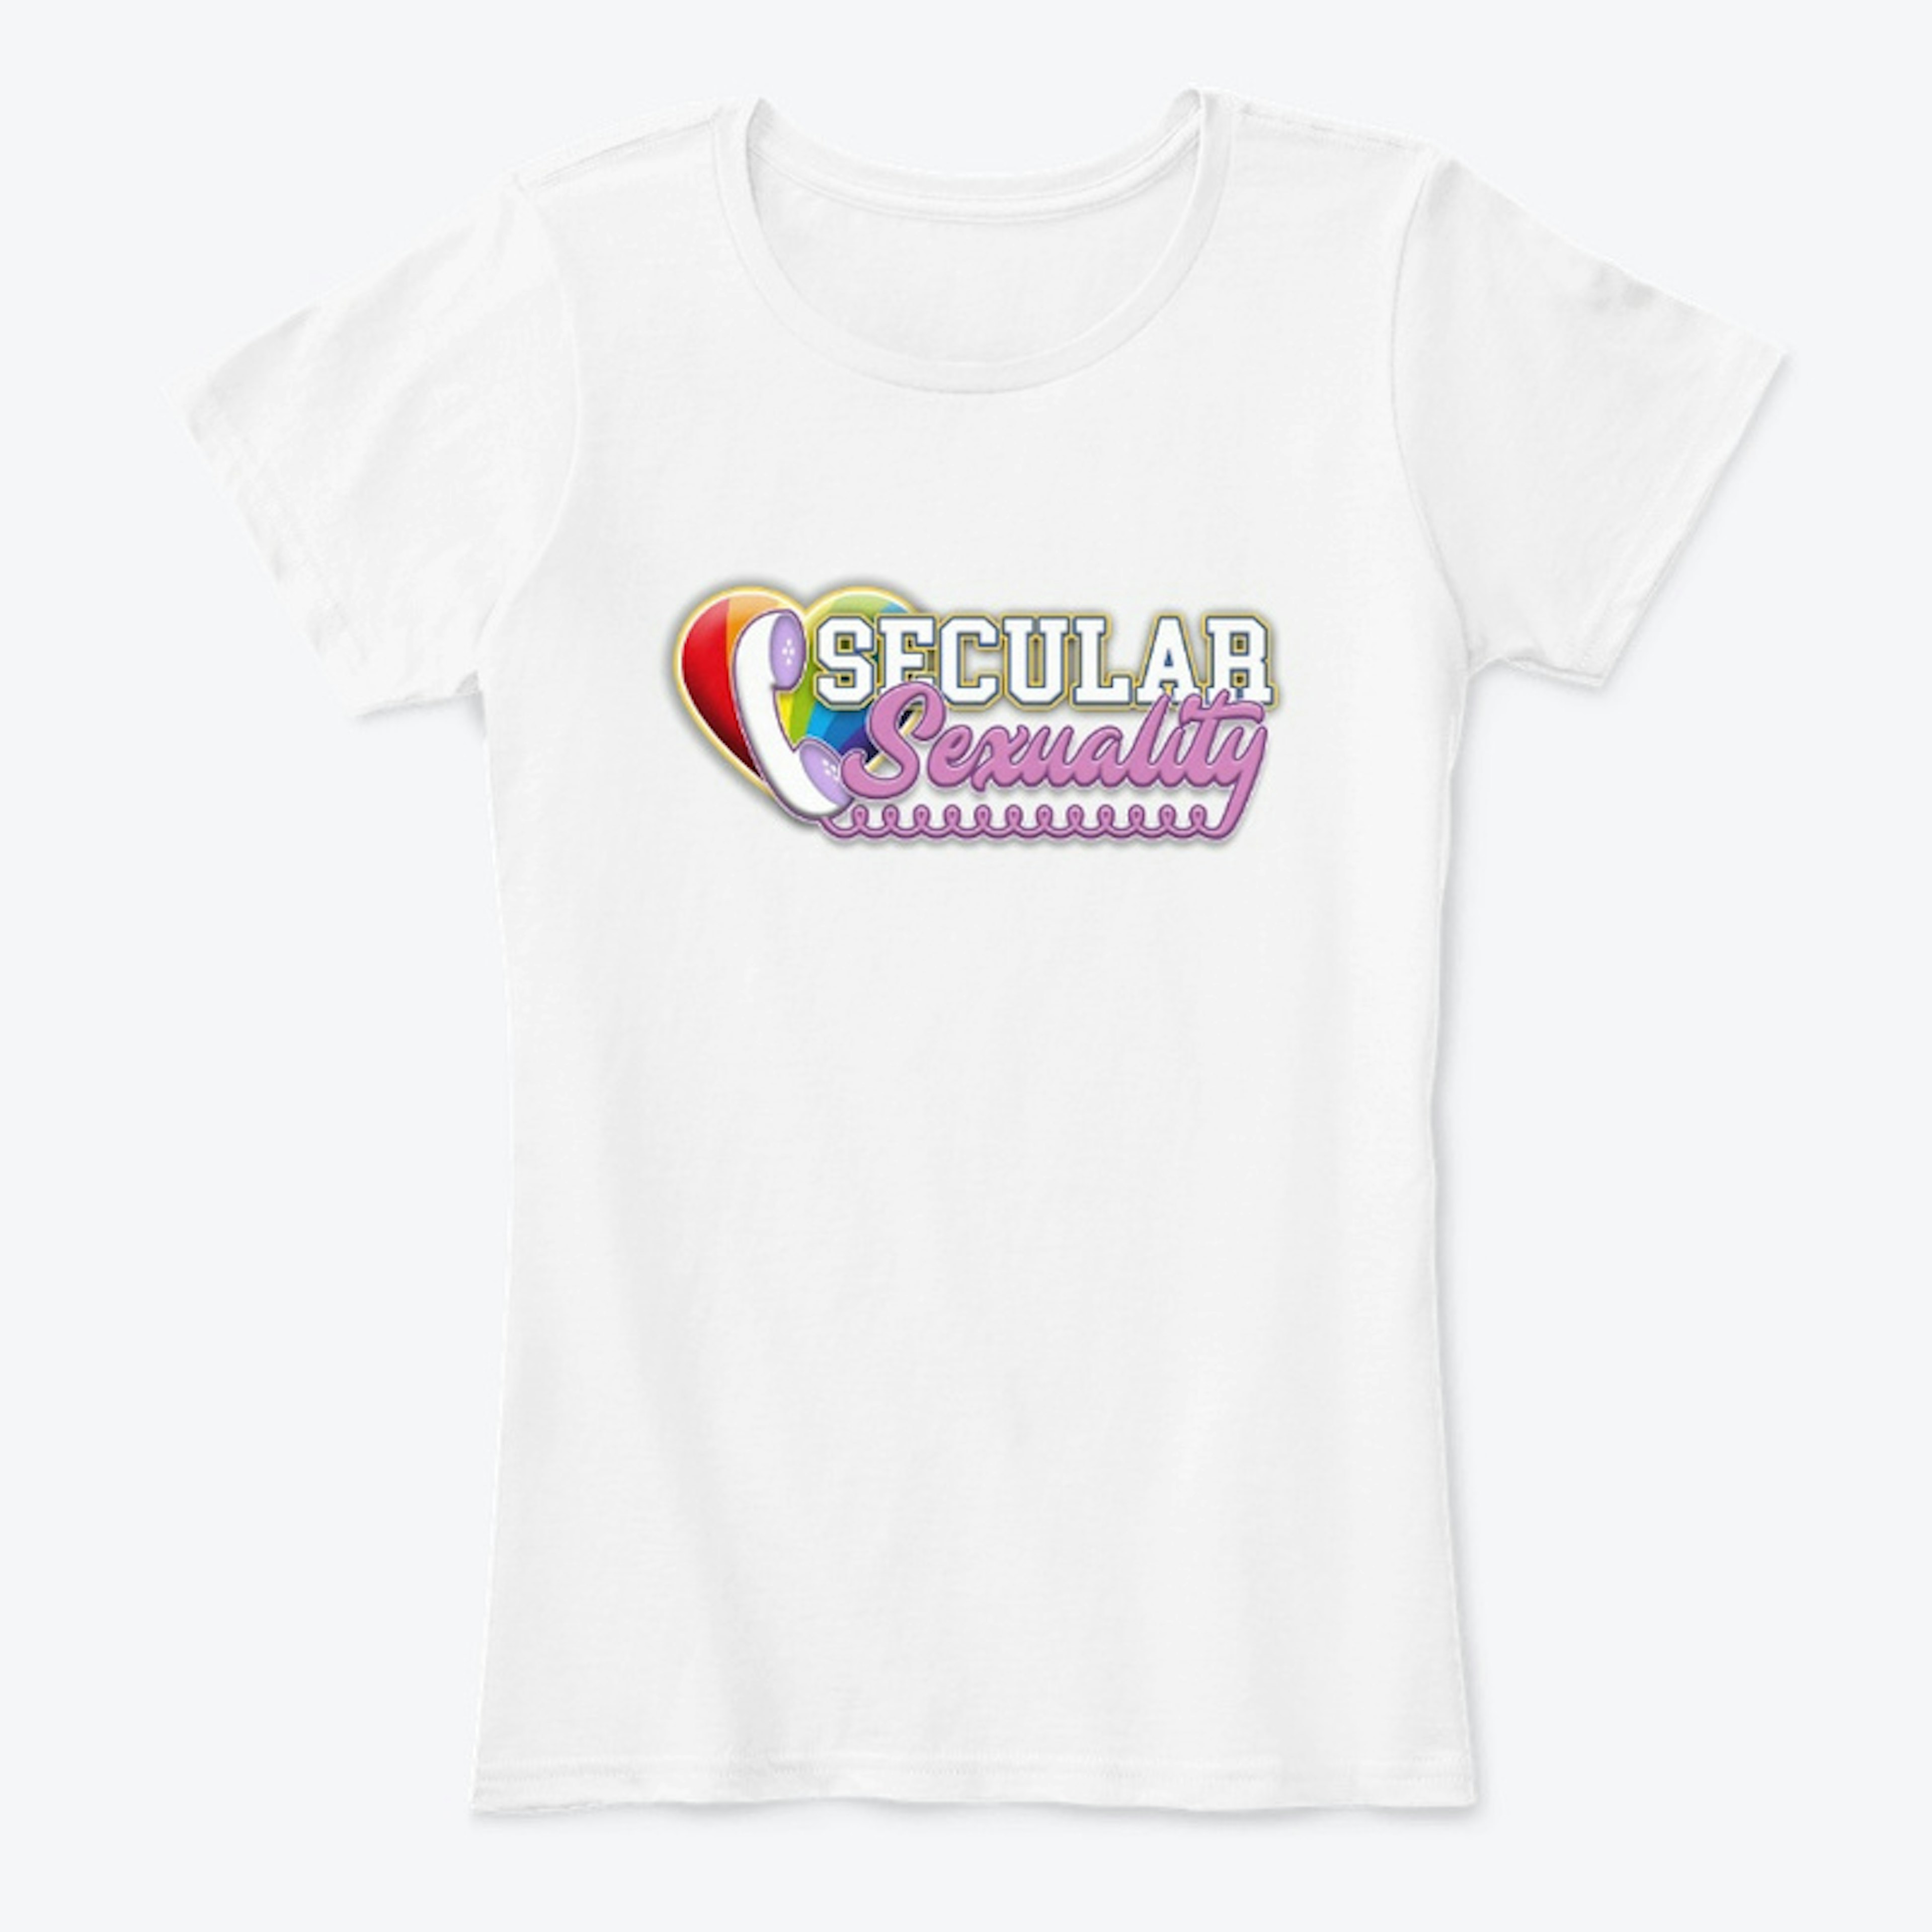 Secular Sexuality - Full Logo - Black